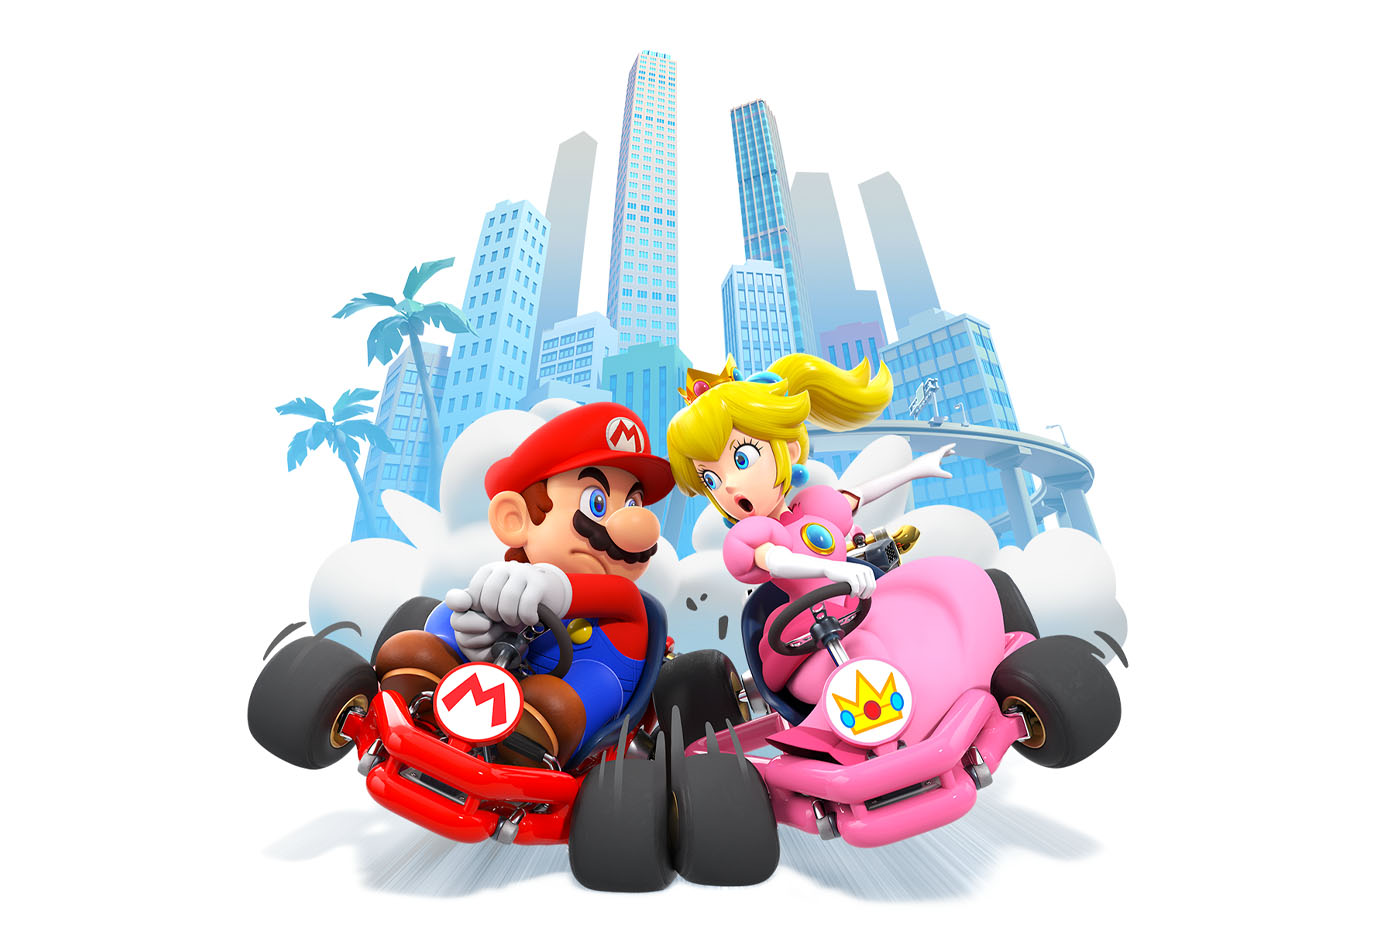 Mario Kart Tour multiplayer update coming Sept. 2022